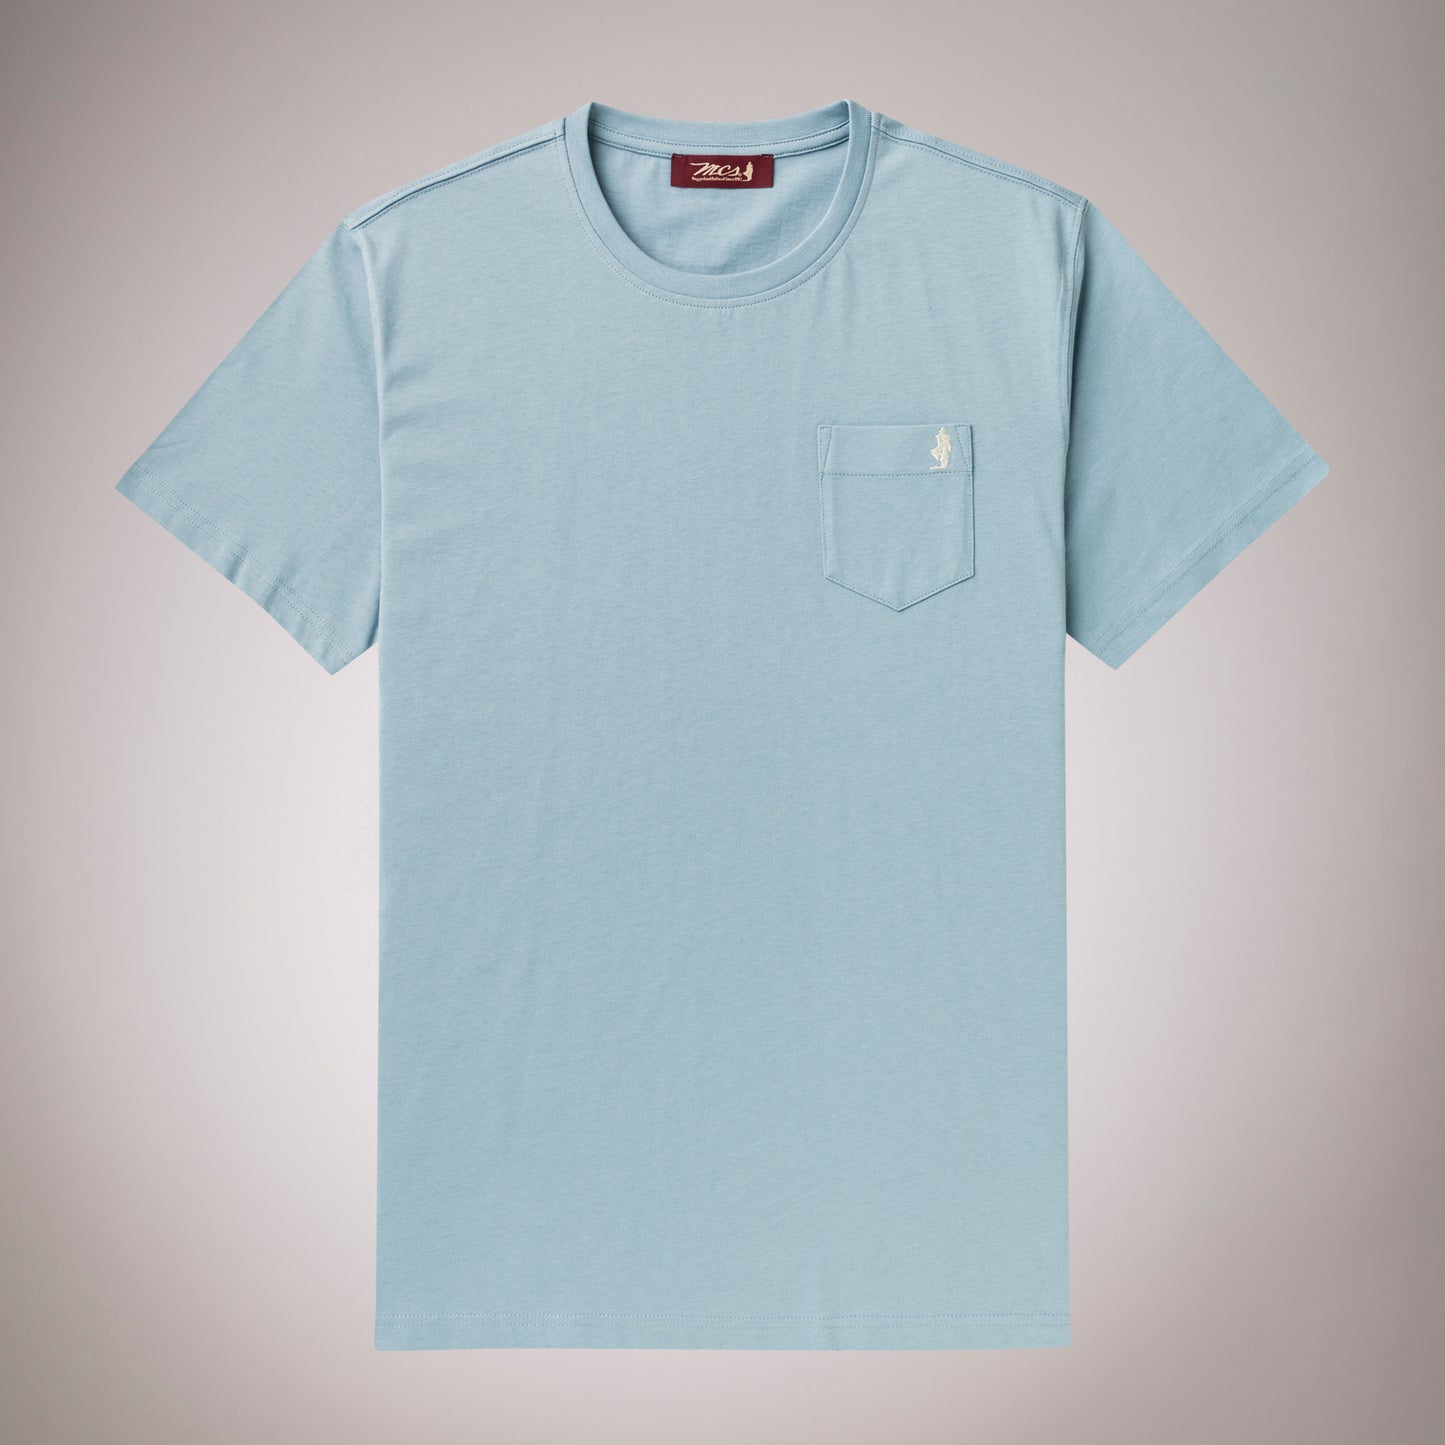 Marlboro Classics Faded Blue Pocket T-Shirt